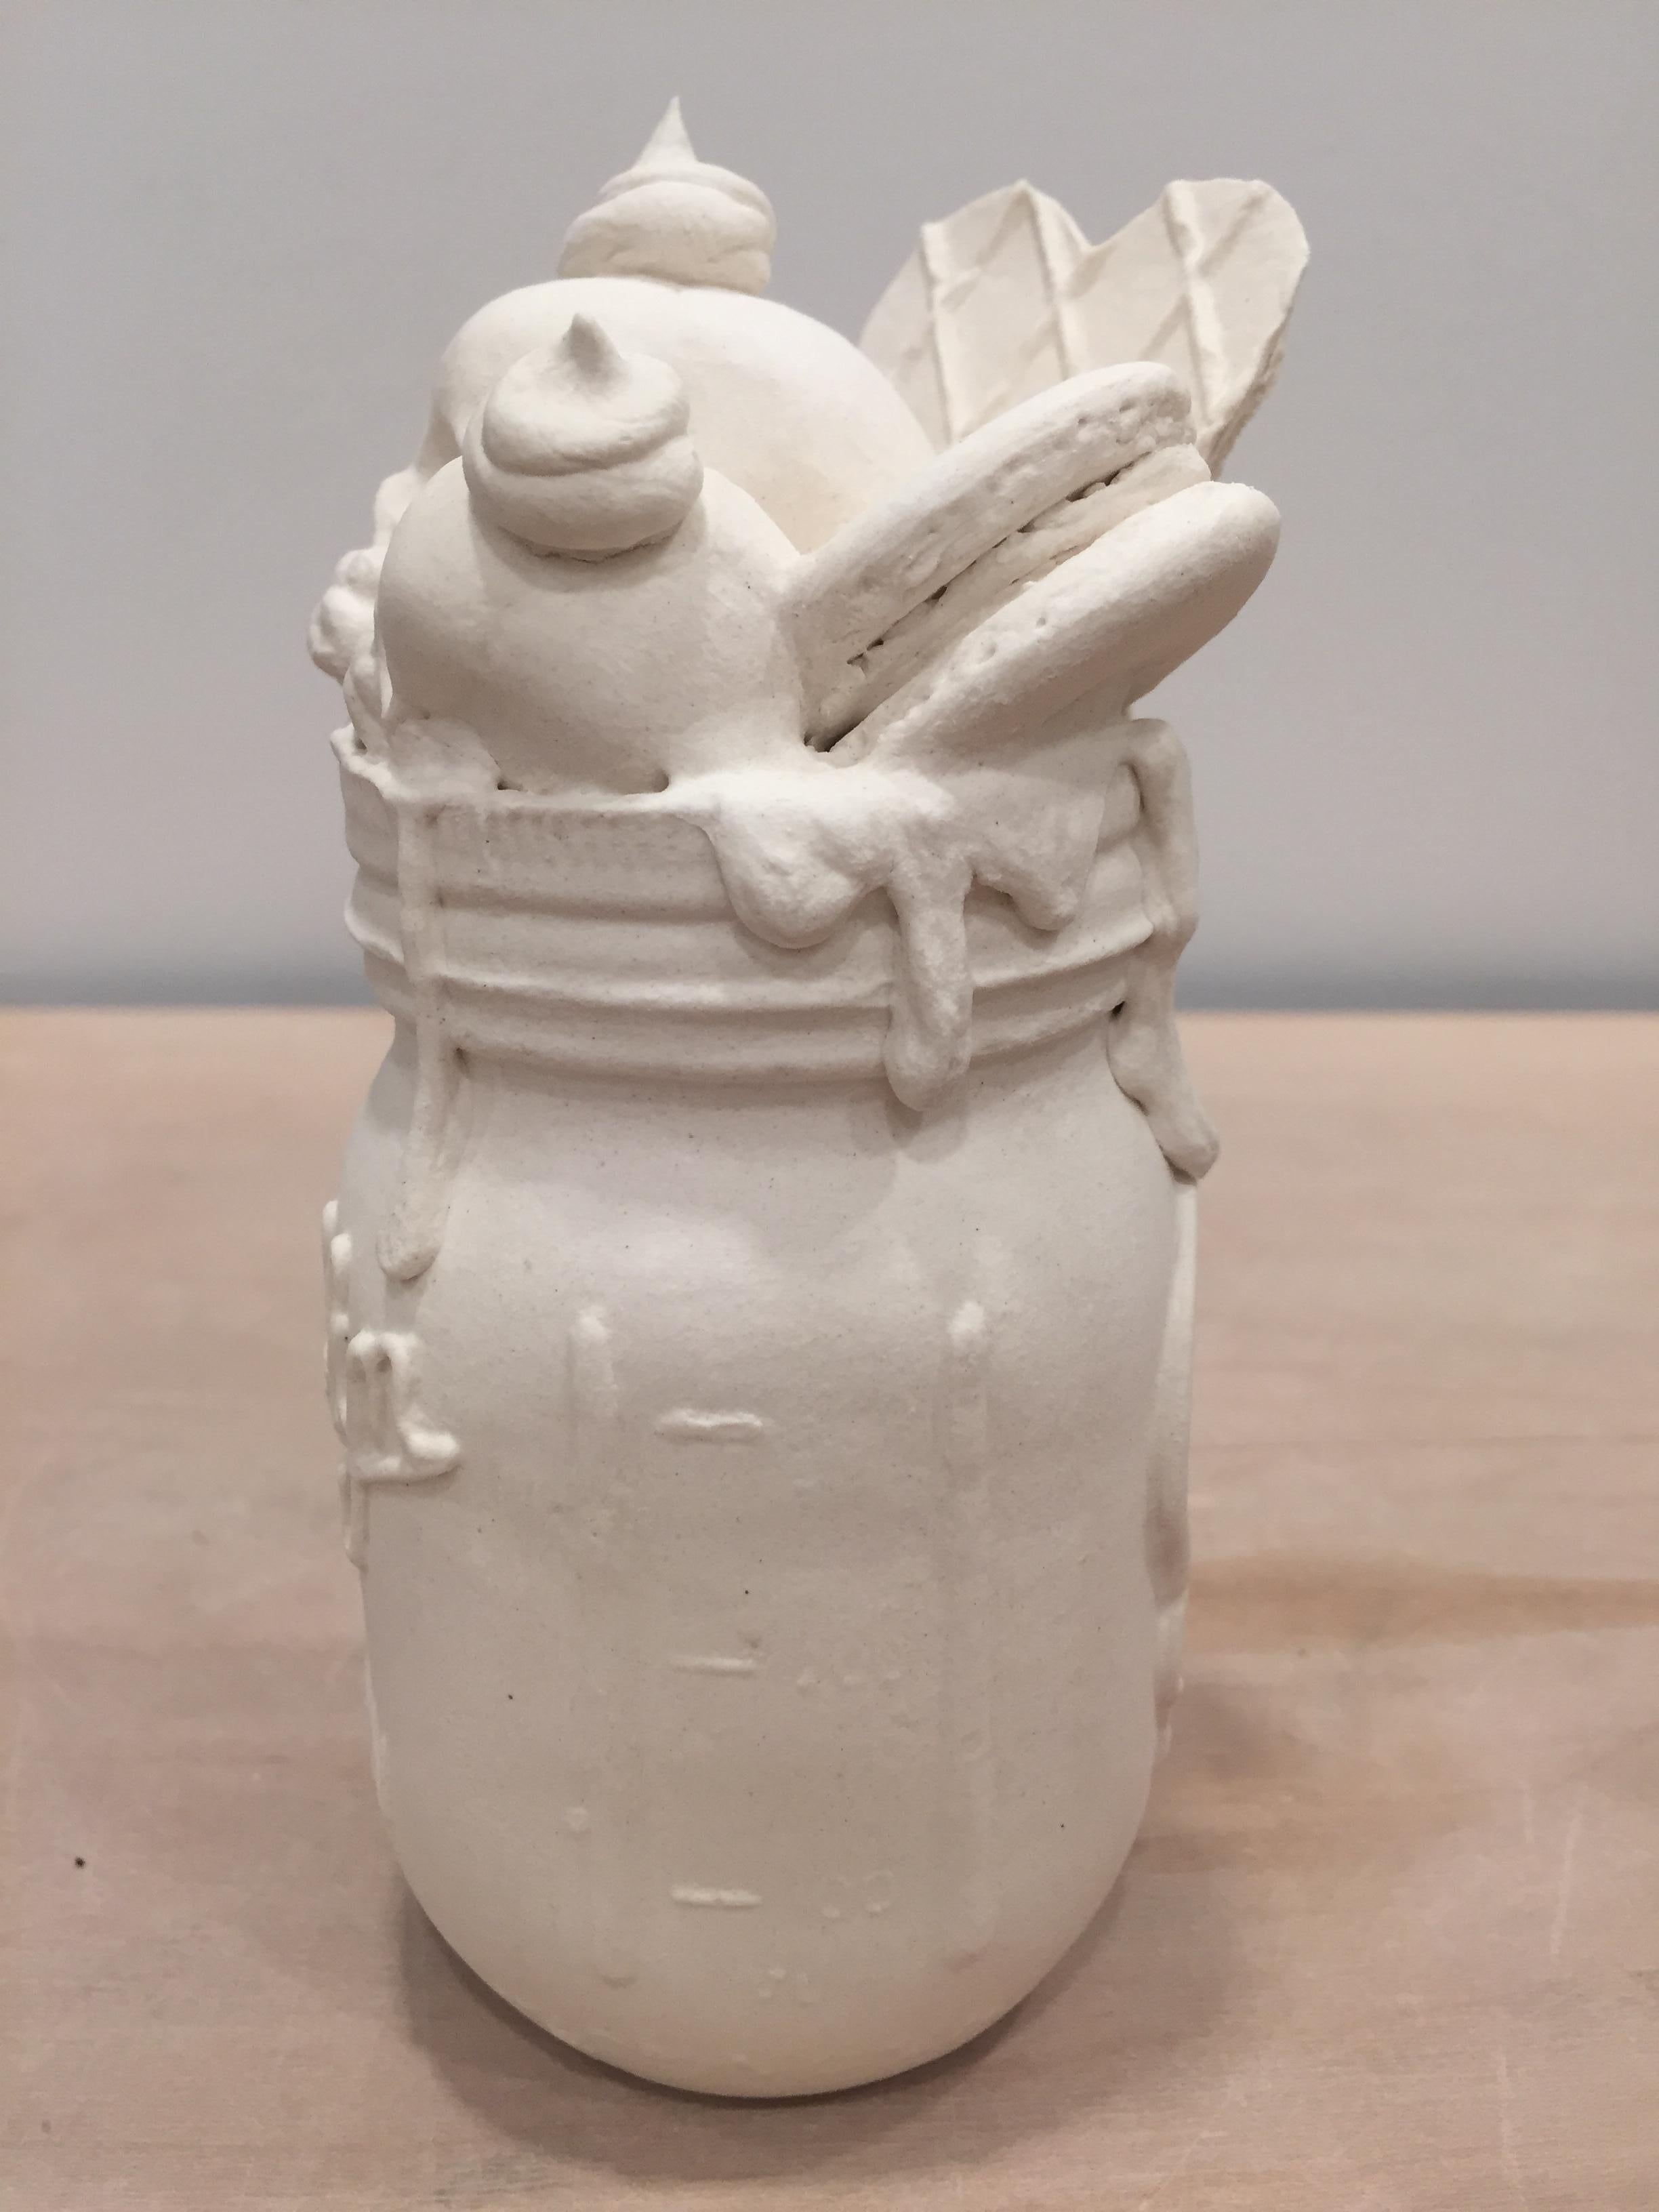 Ice cream float jar 2 - Contemporary Sculpture by Jacqueline Tse